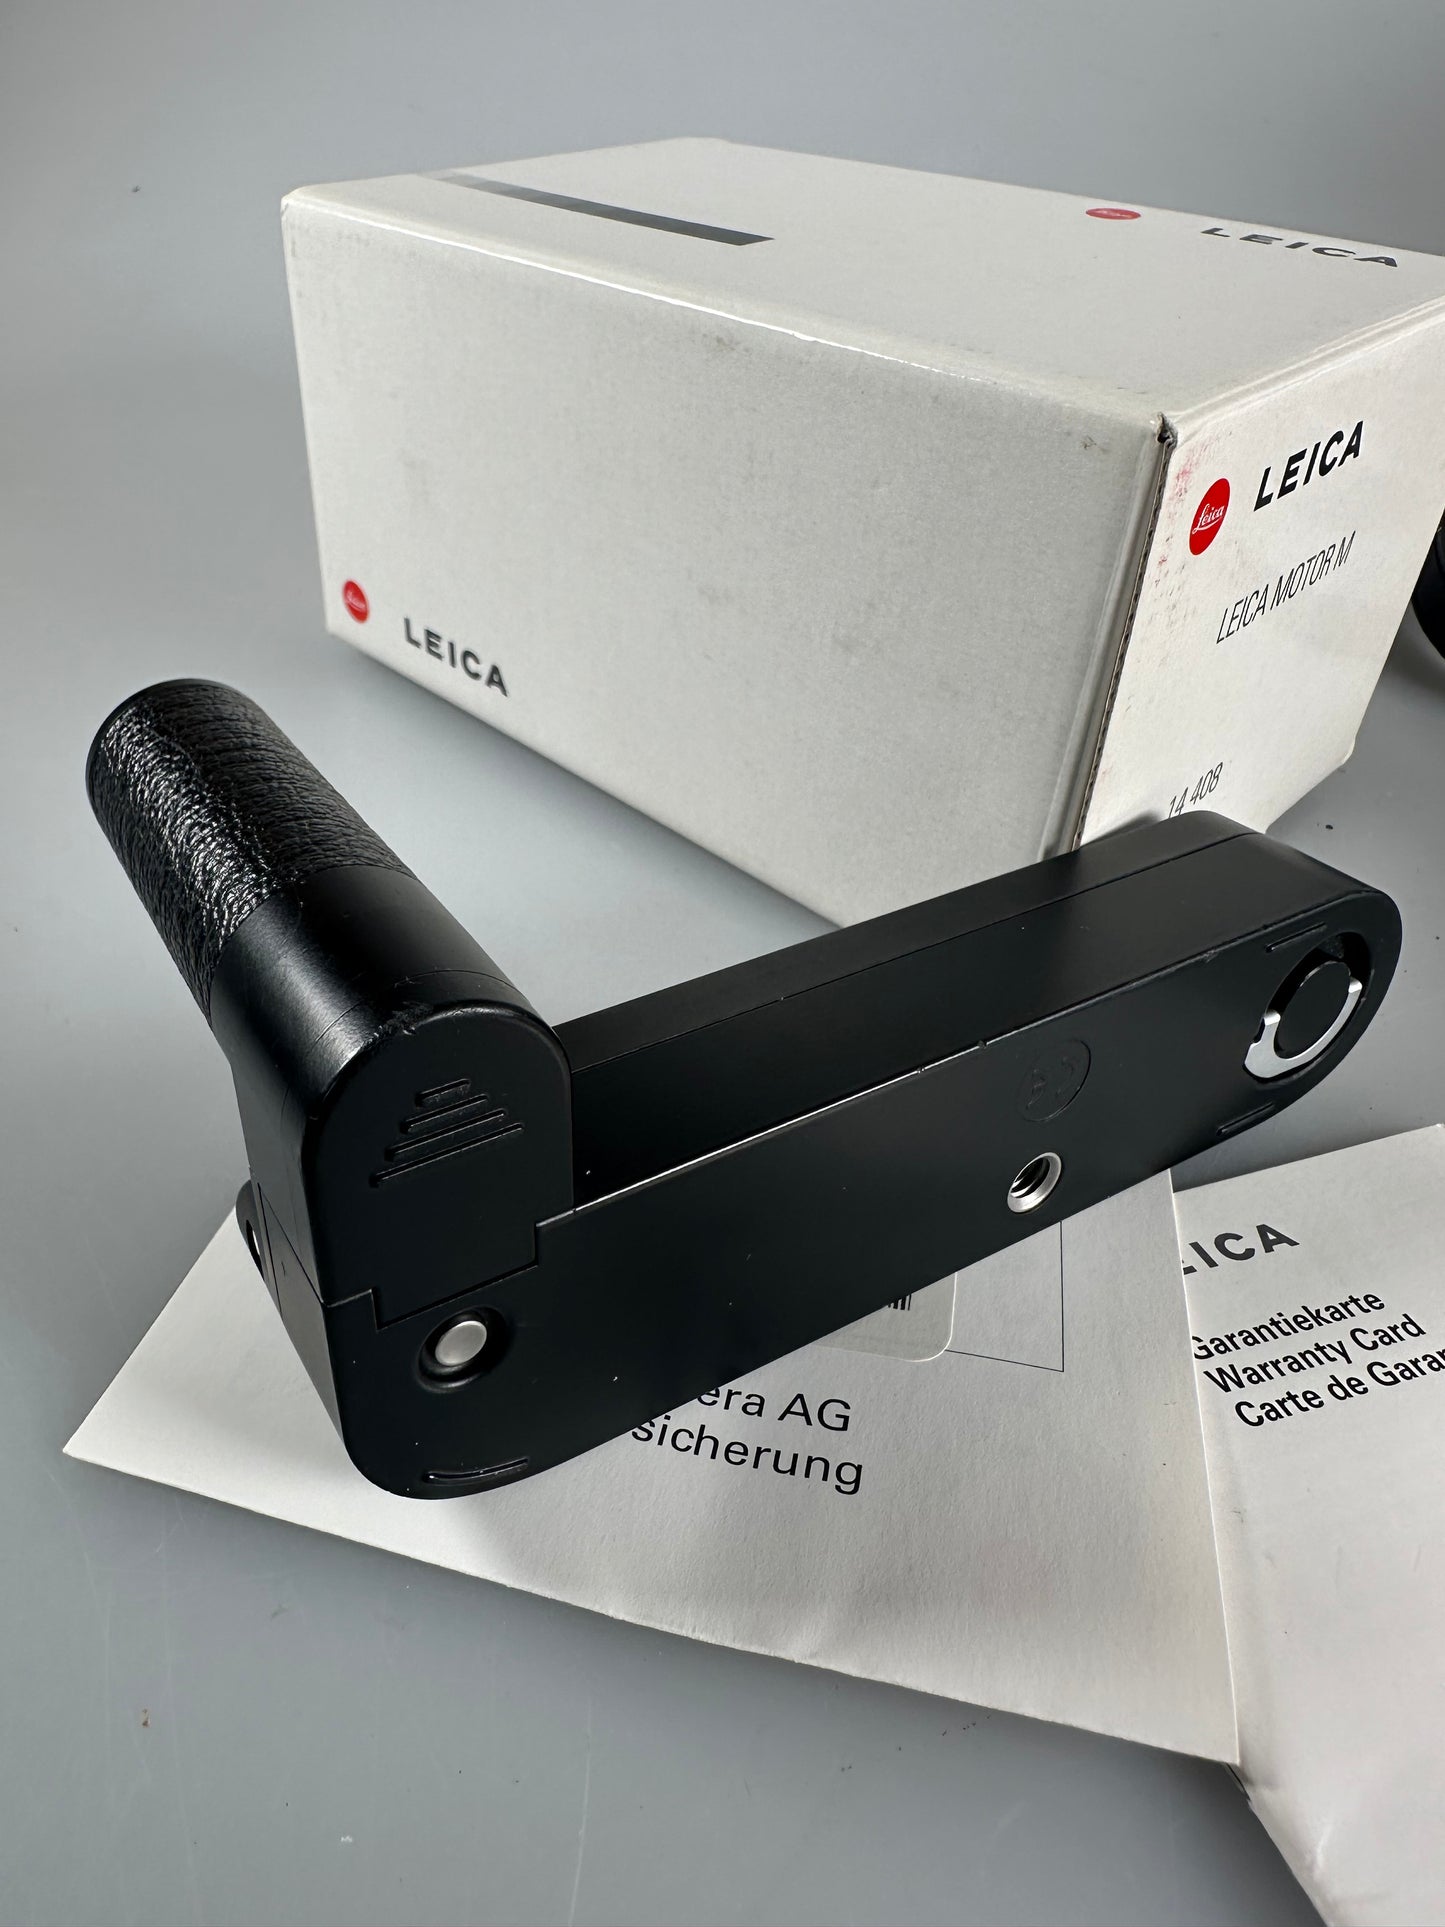 Leica 14408 Motor M camera winder for M4-P, M6, M7, MP